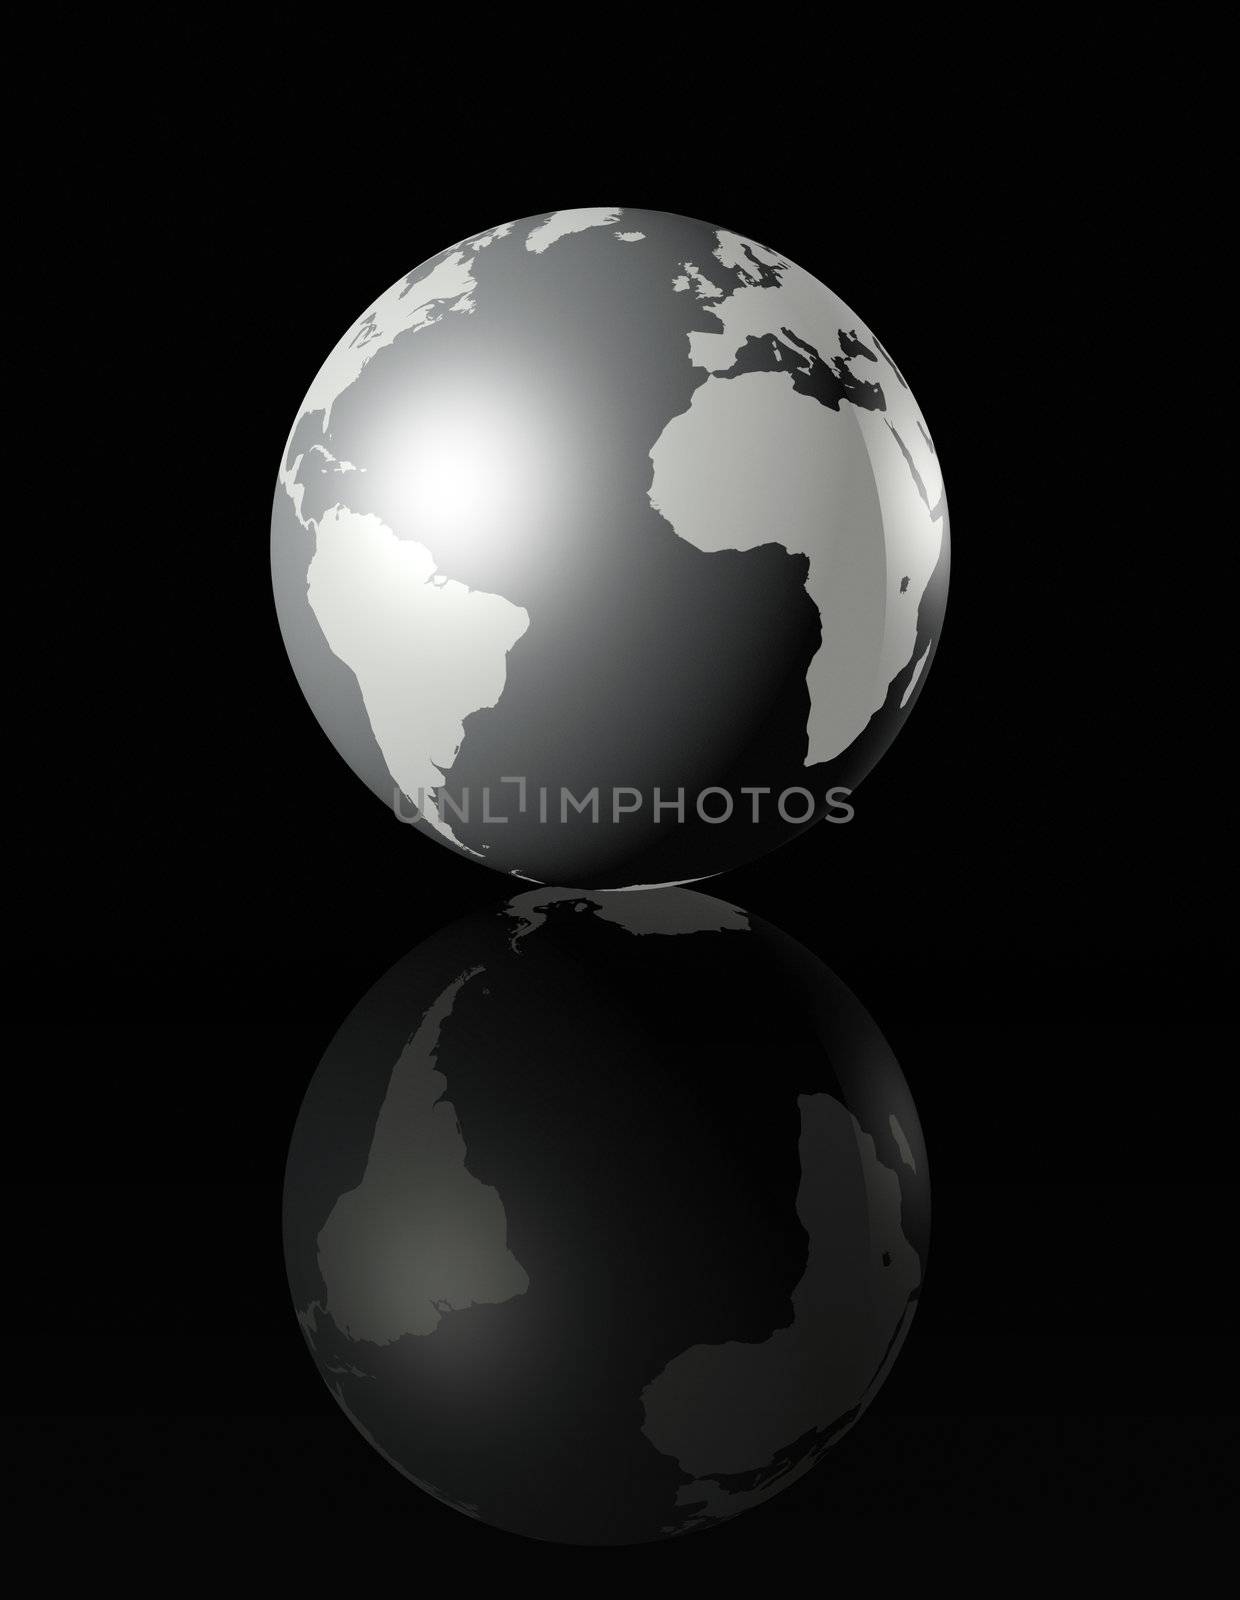 silver glossy globe on black background by daboost